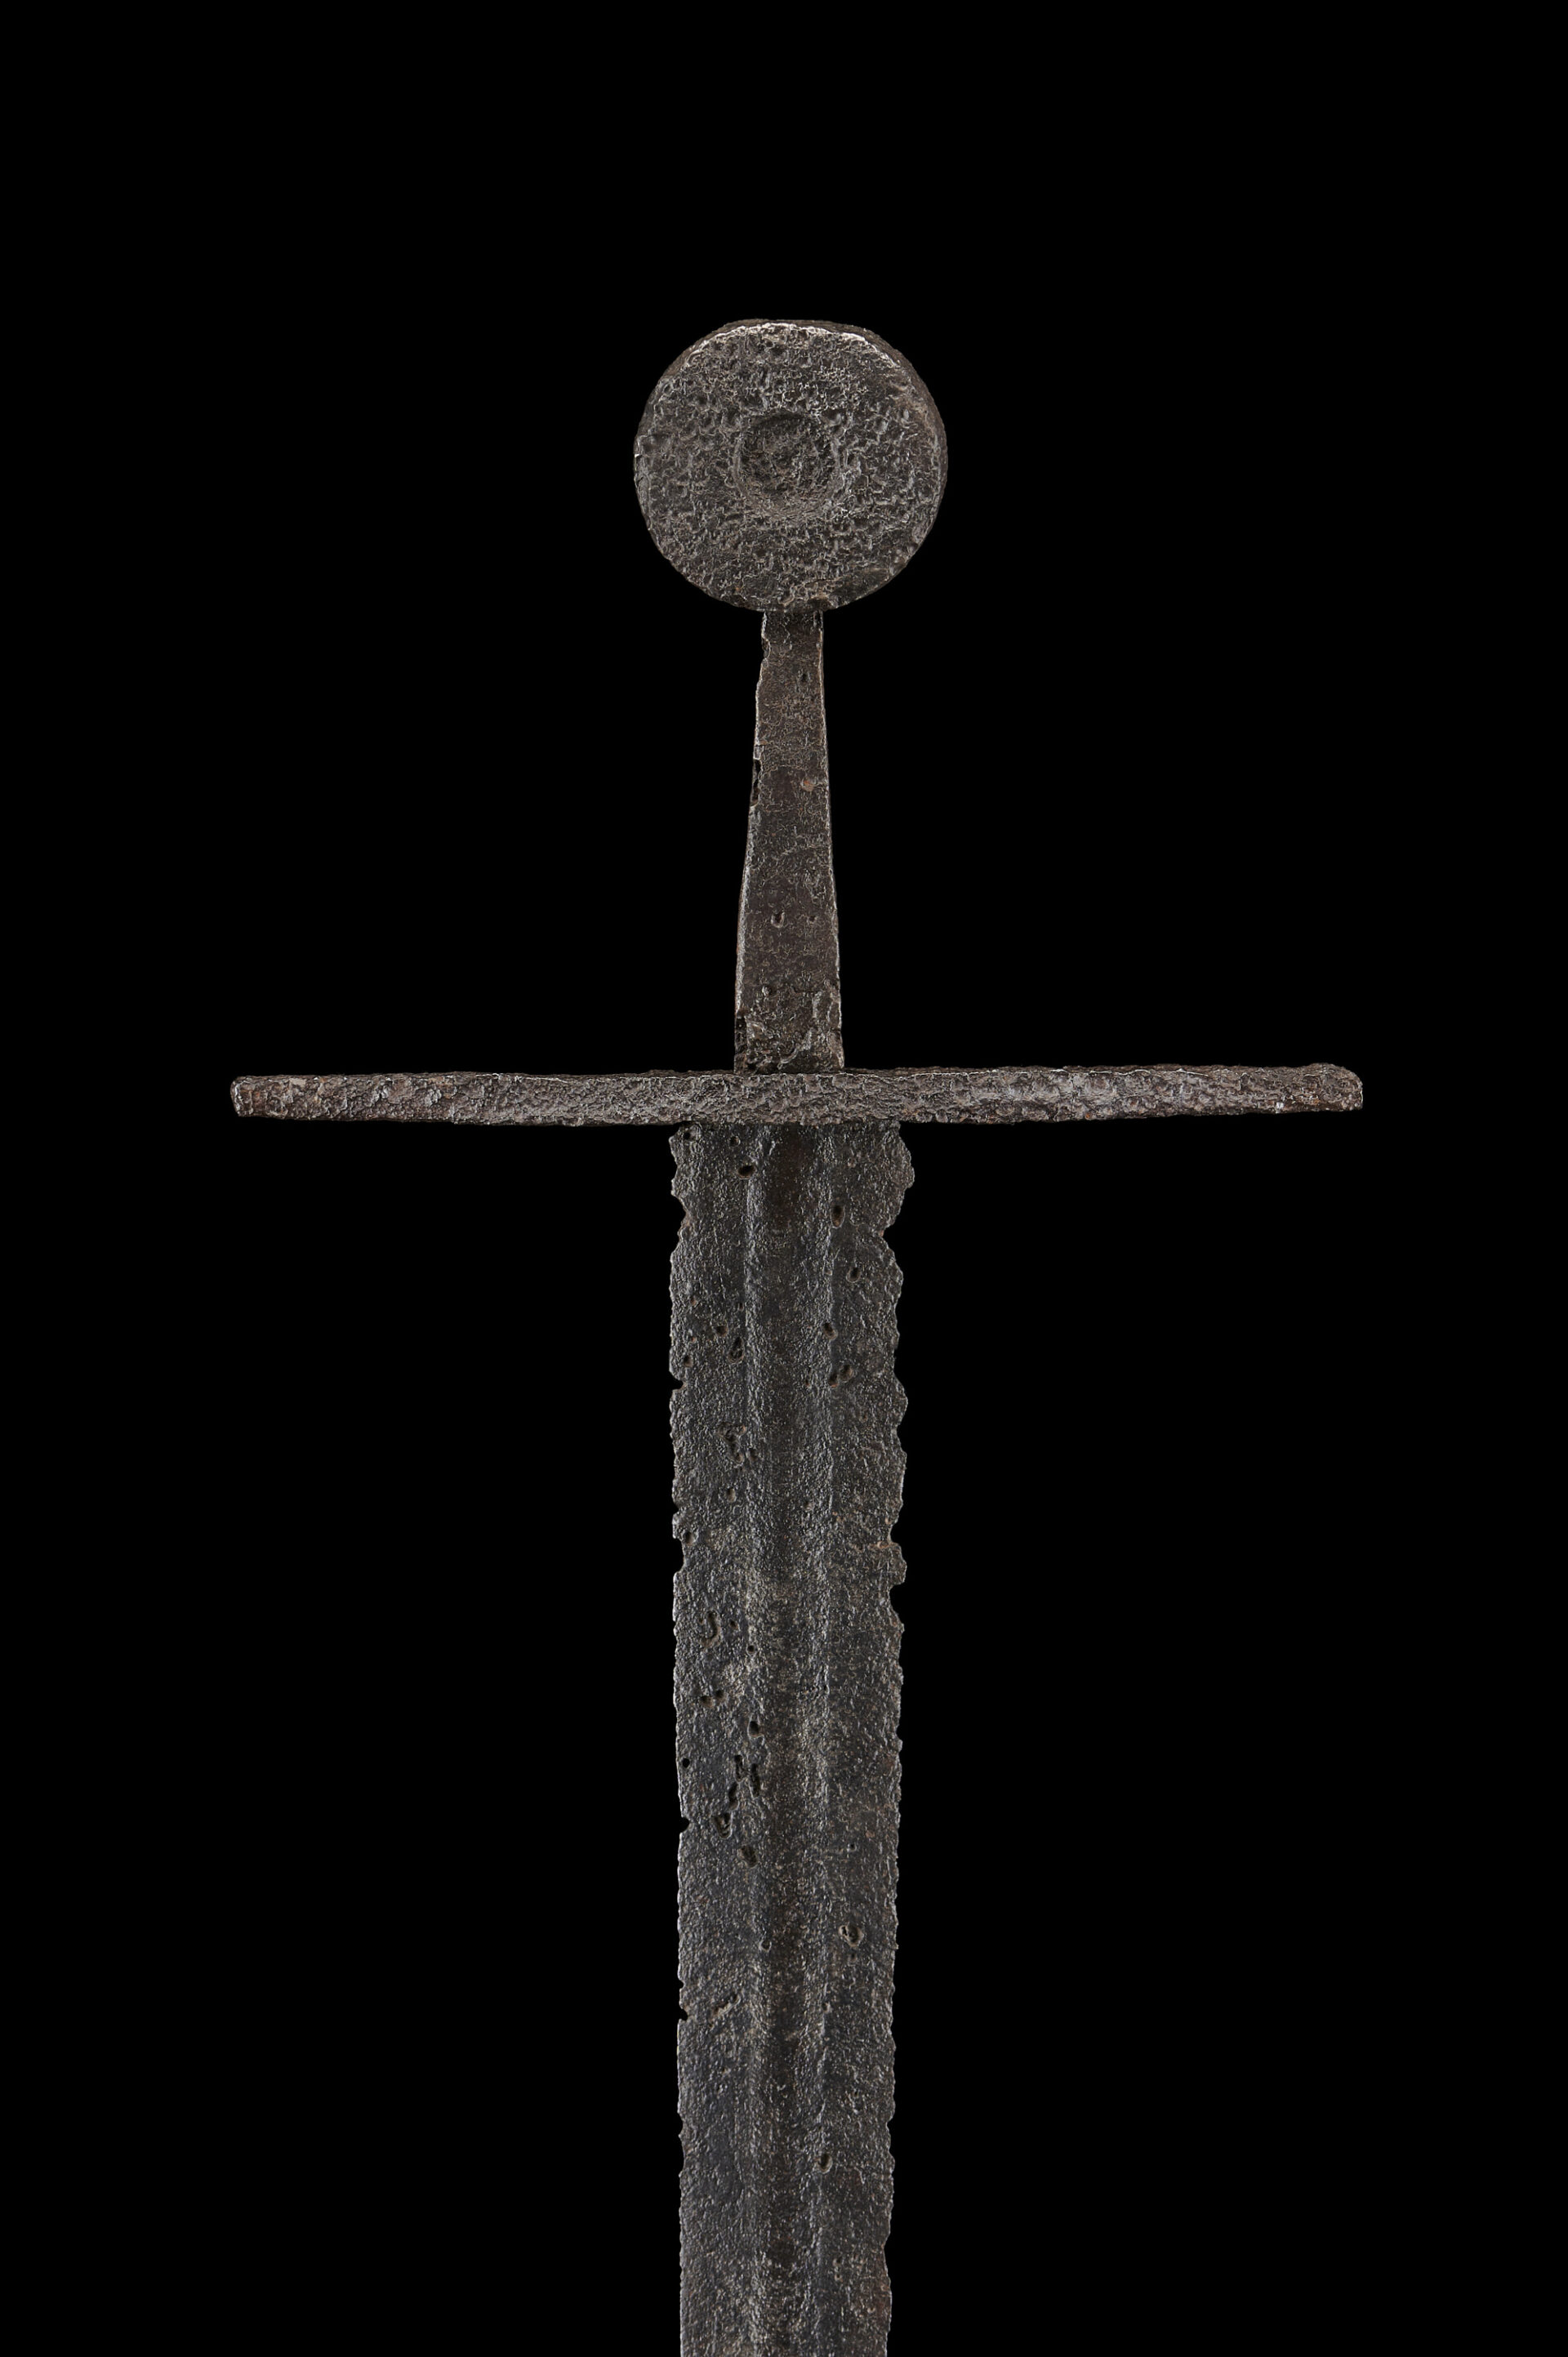 A MEDIEVAL KNIGHTLY SWORD OF CASTILON TYPE, 15TH CENTURY